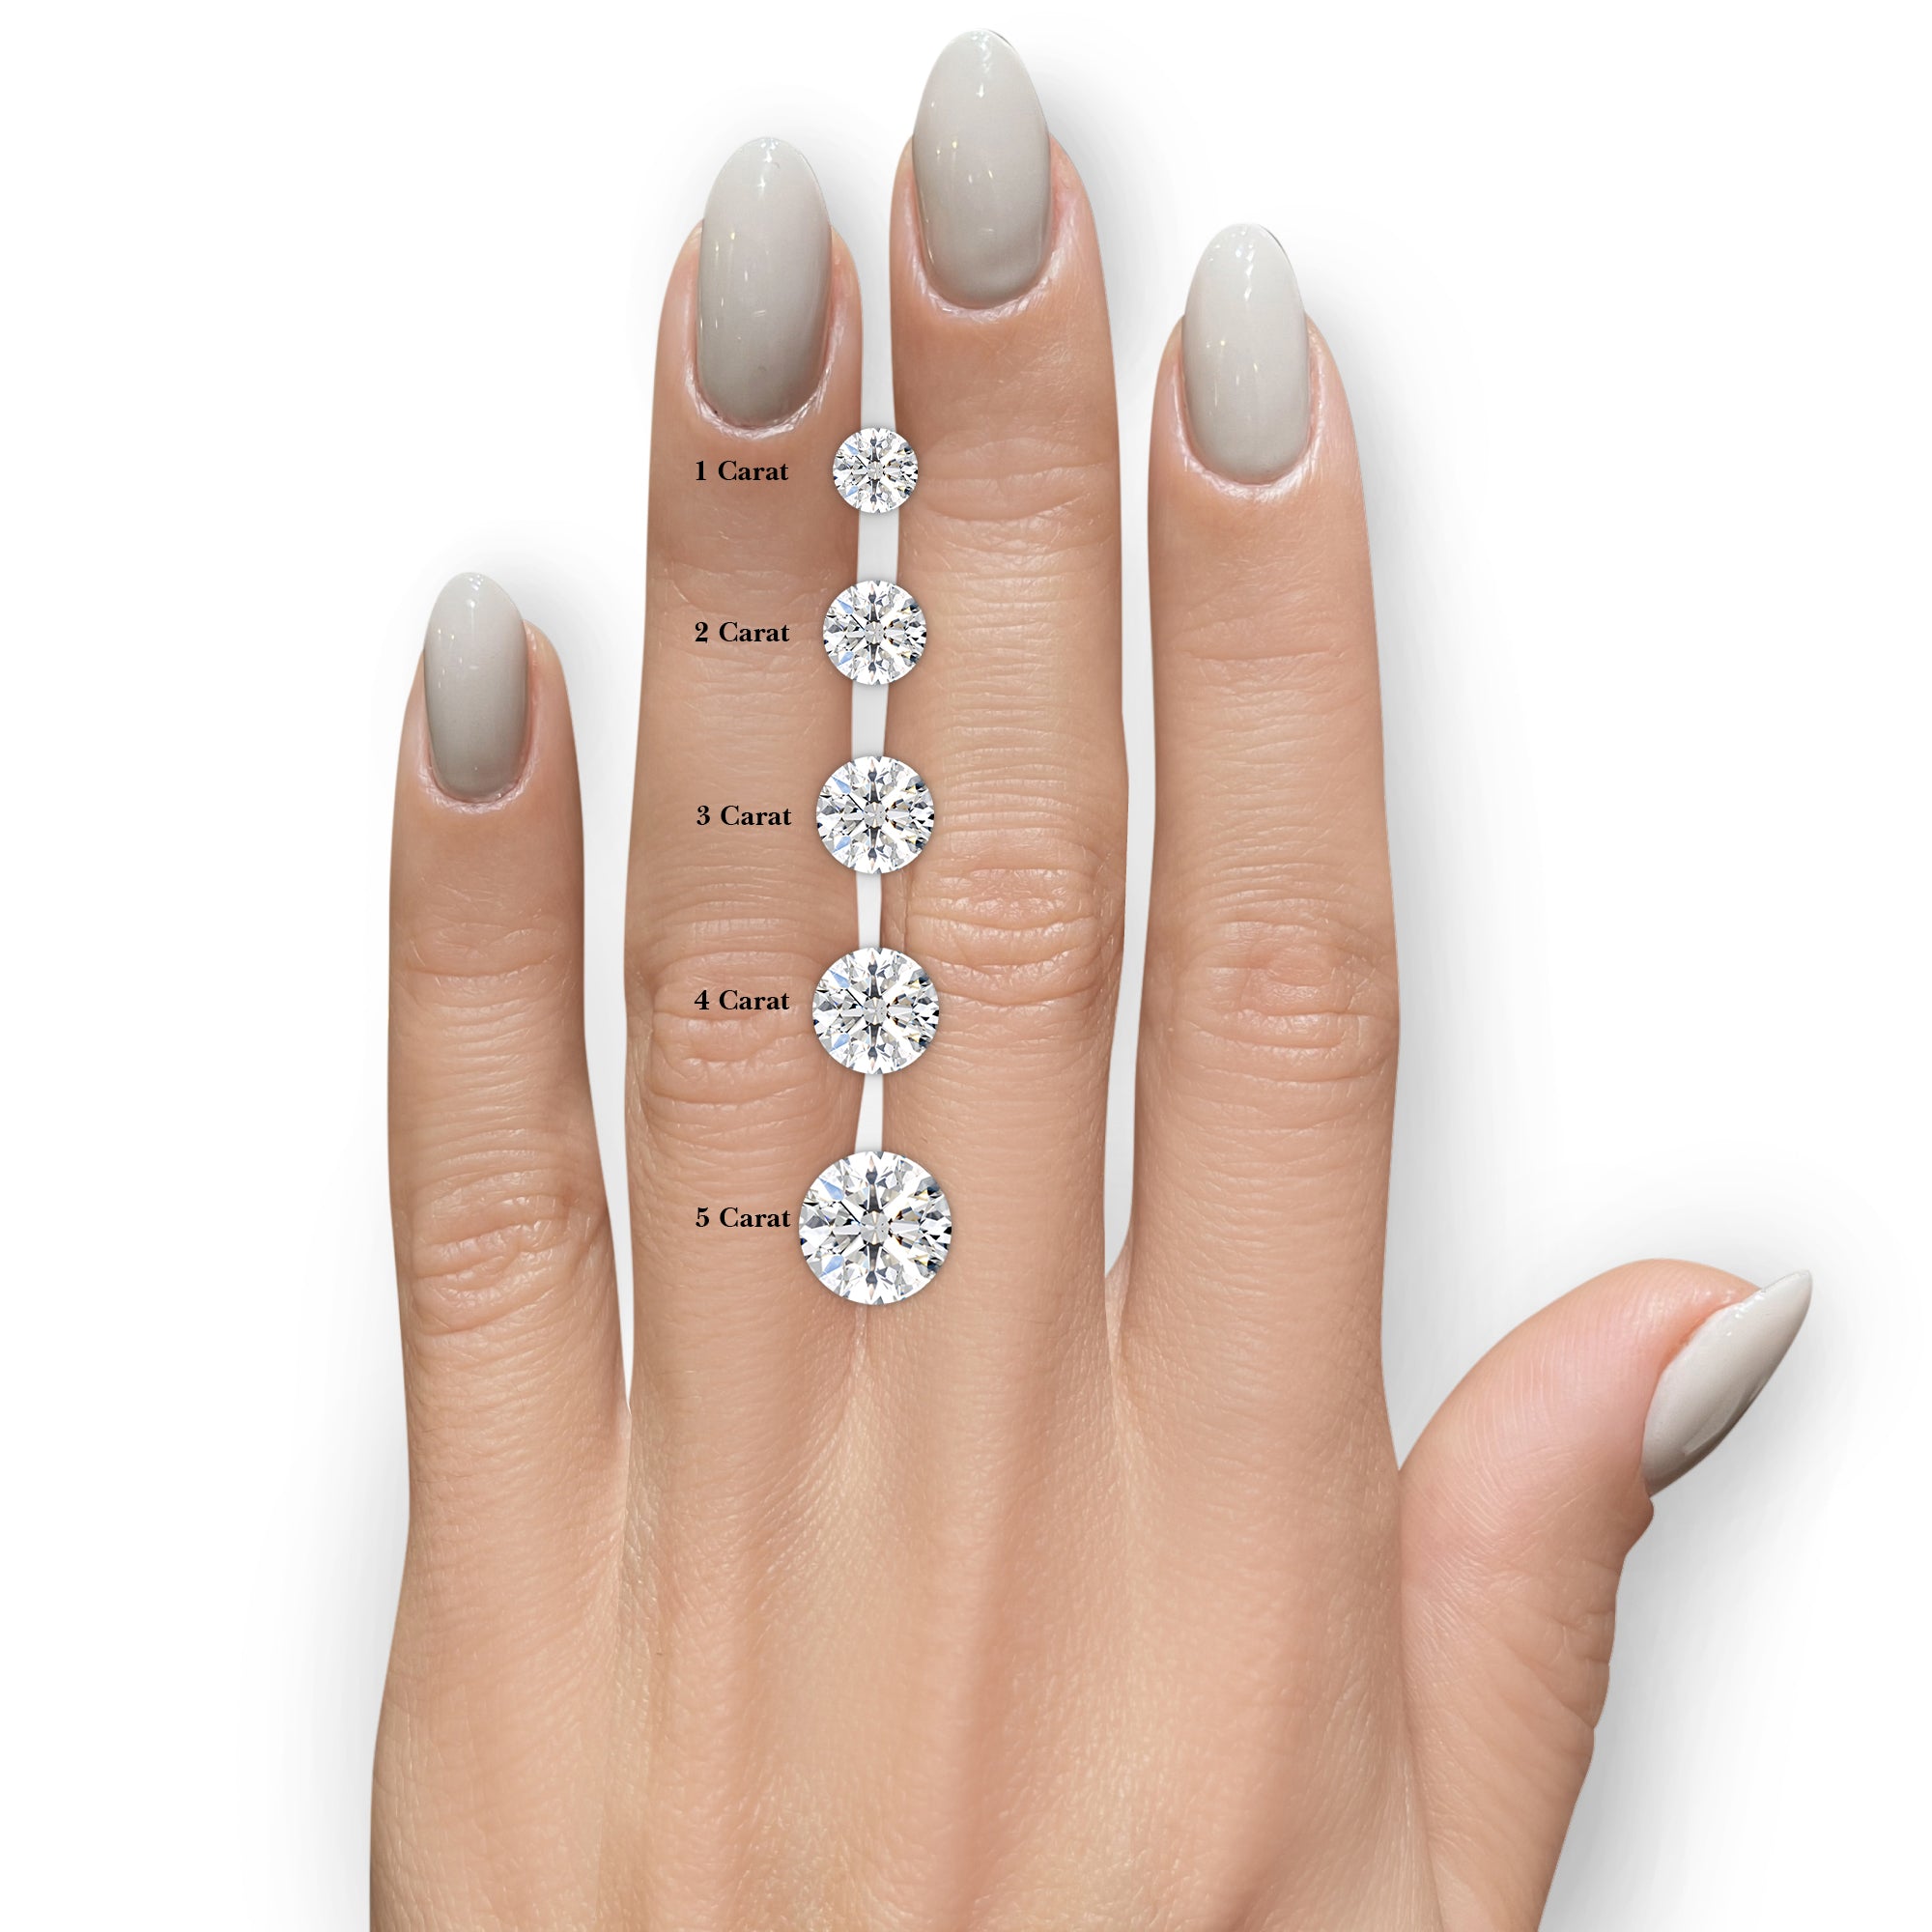 Cynthia Diamond Engagement Ring -Platinum